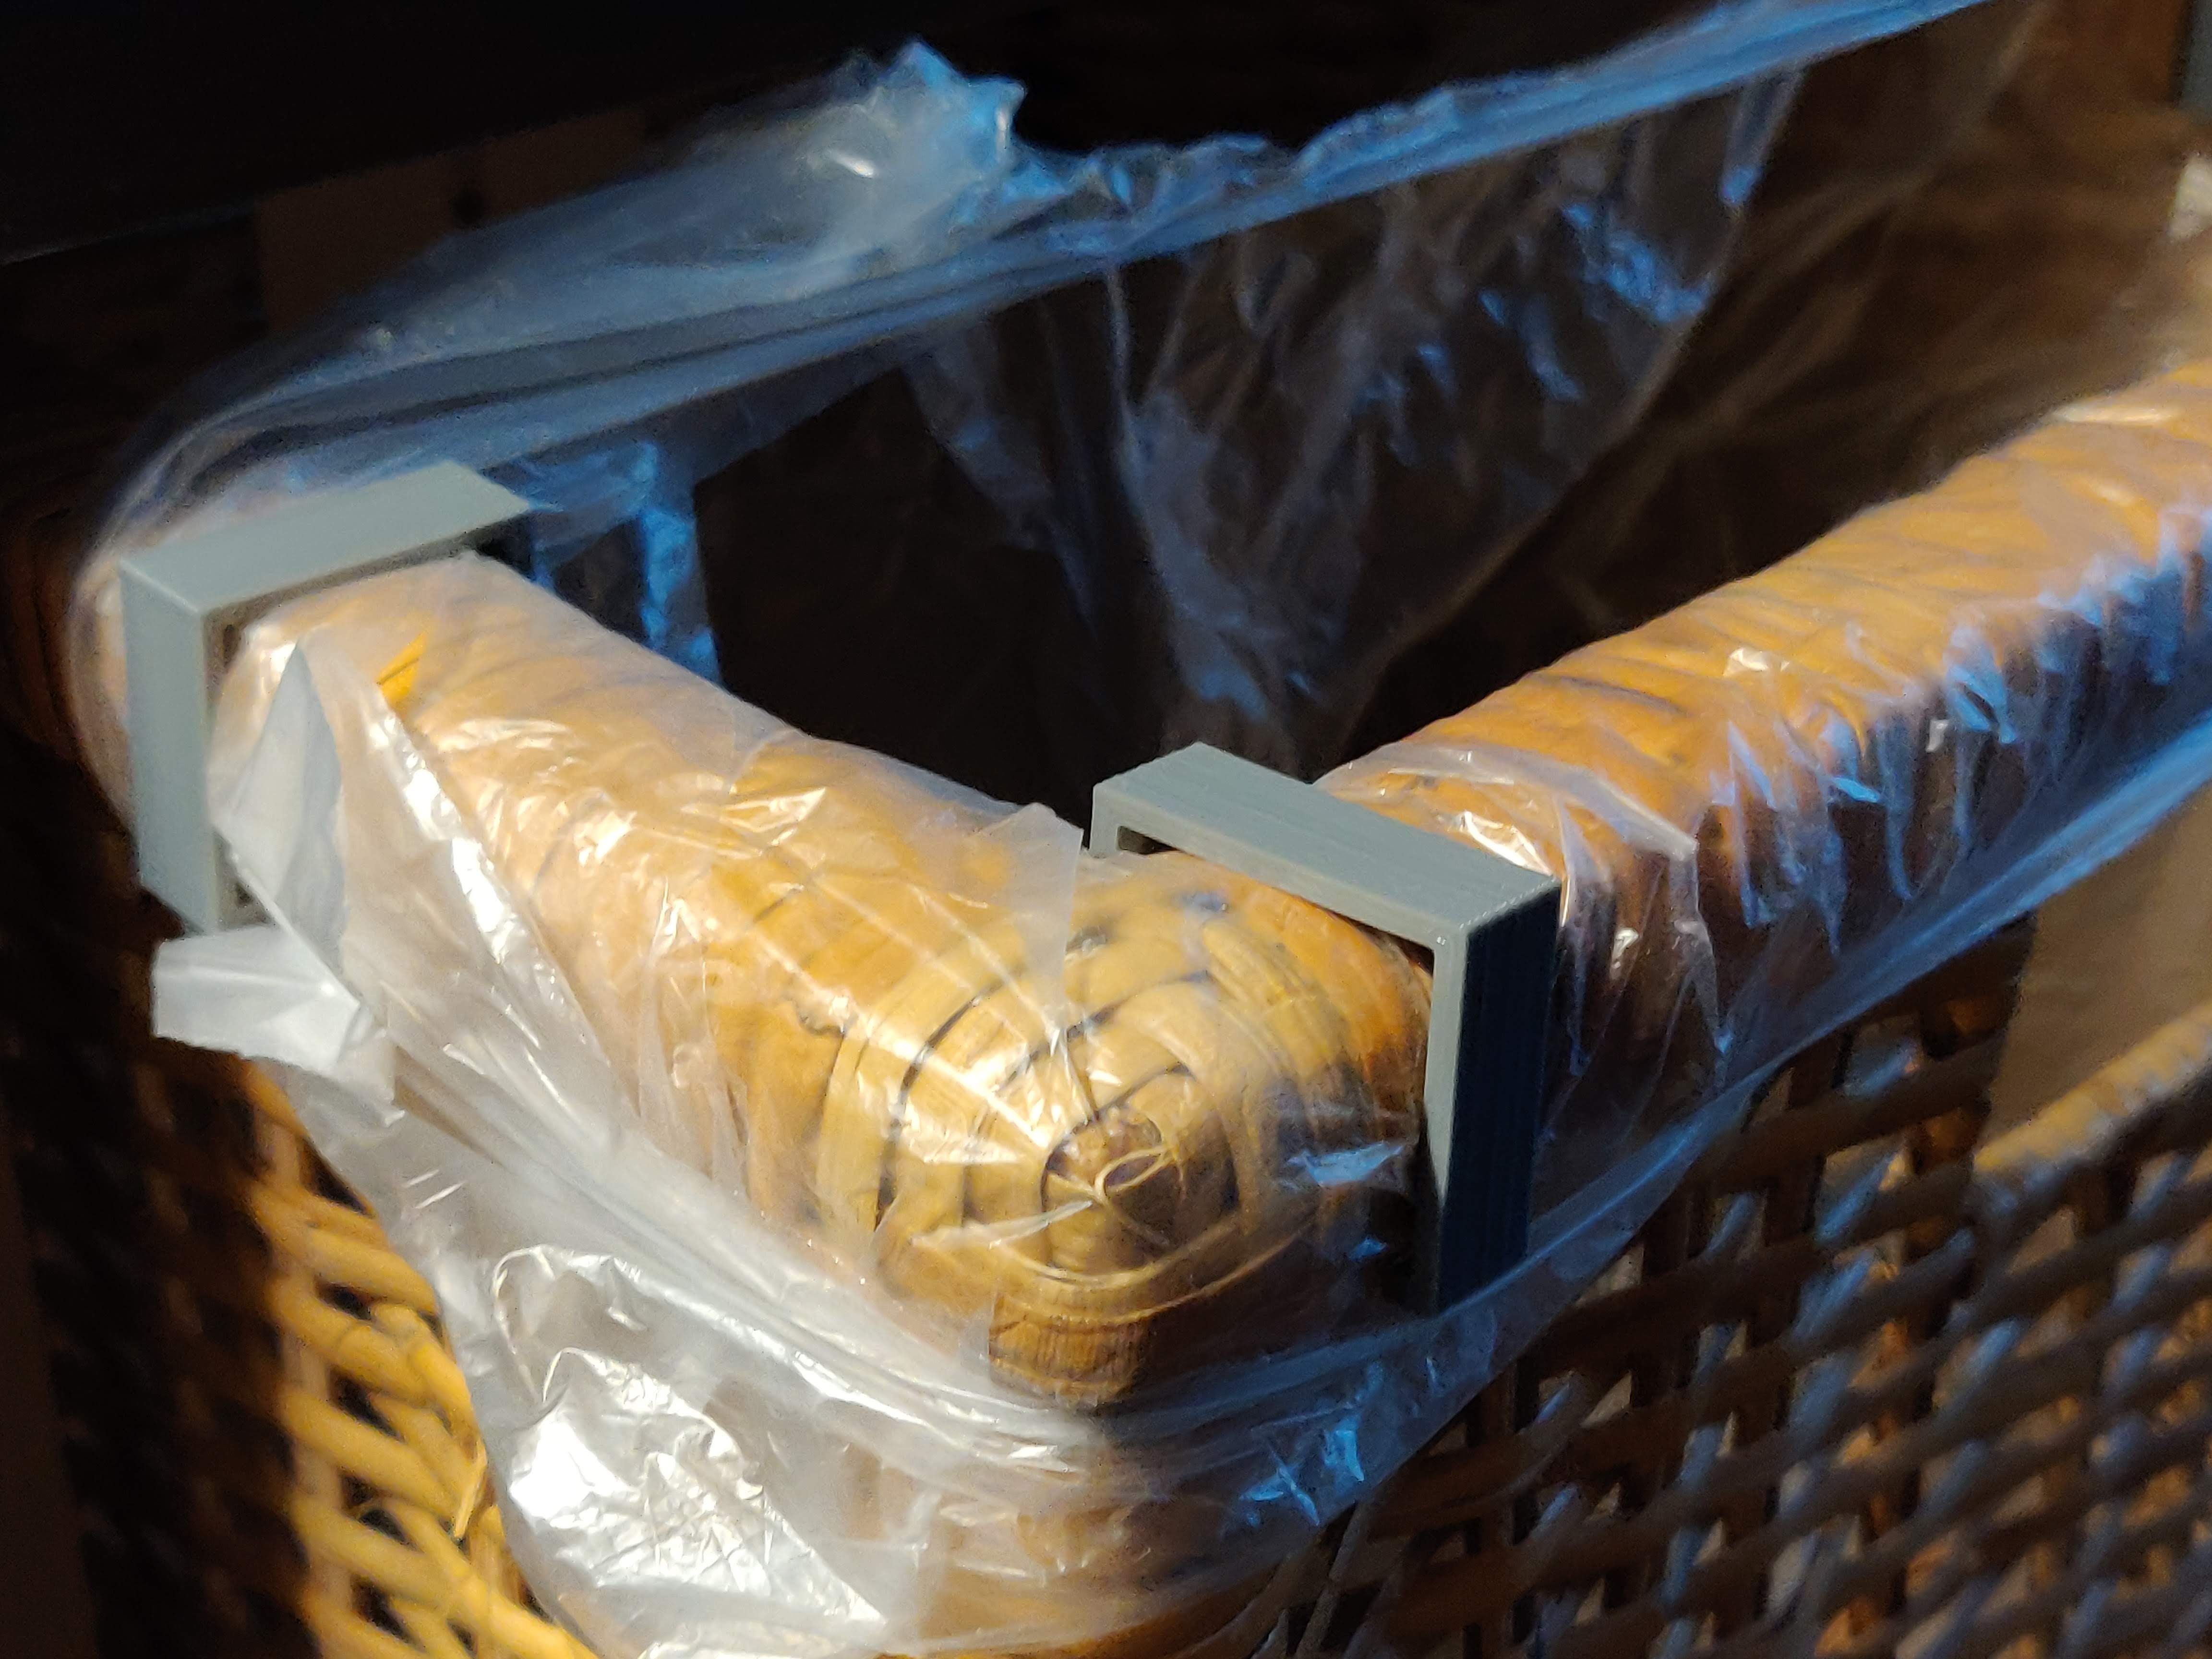 Garbage bag clip for IKEA Expedit / Kallax "basket" drawers